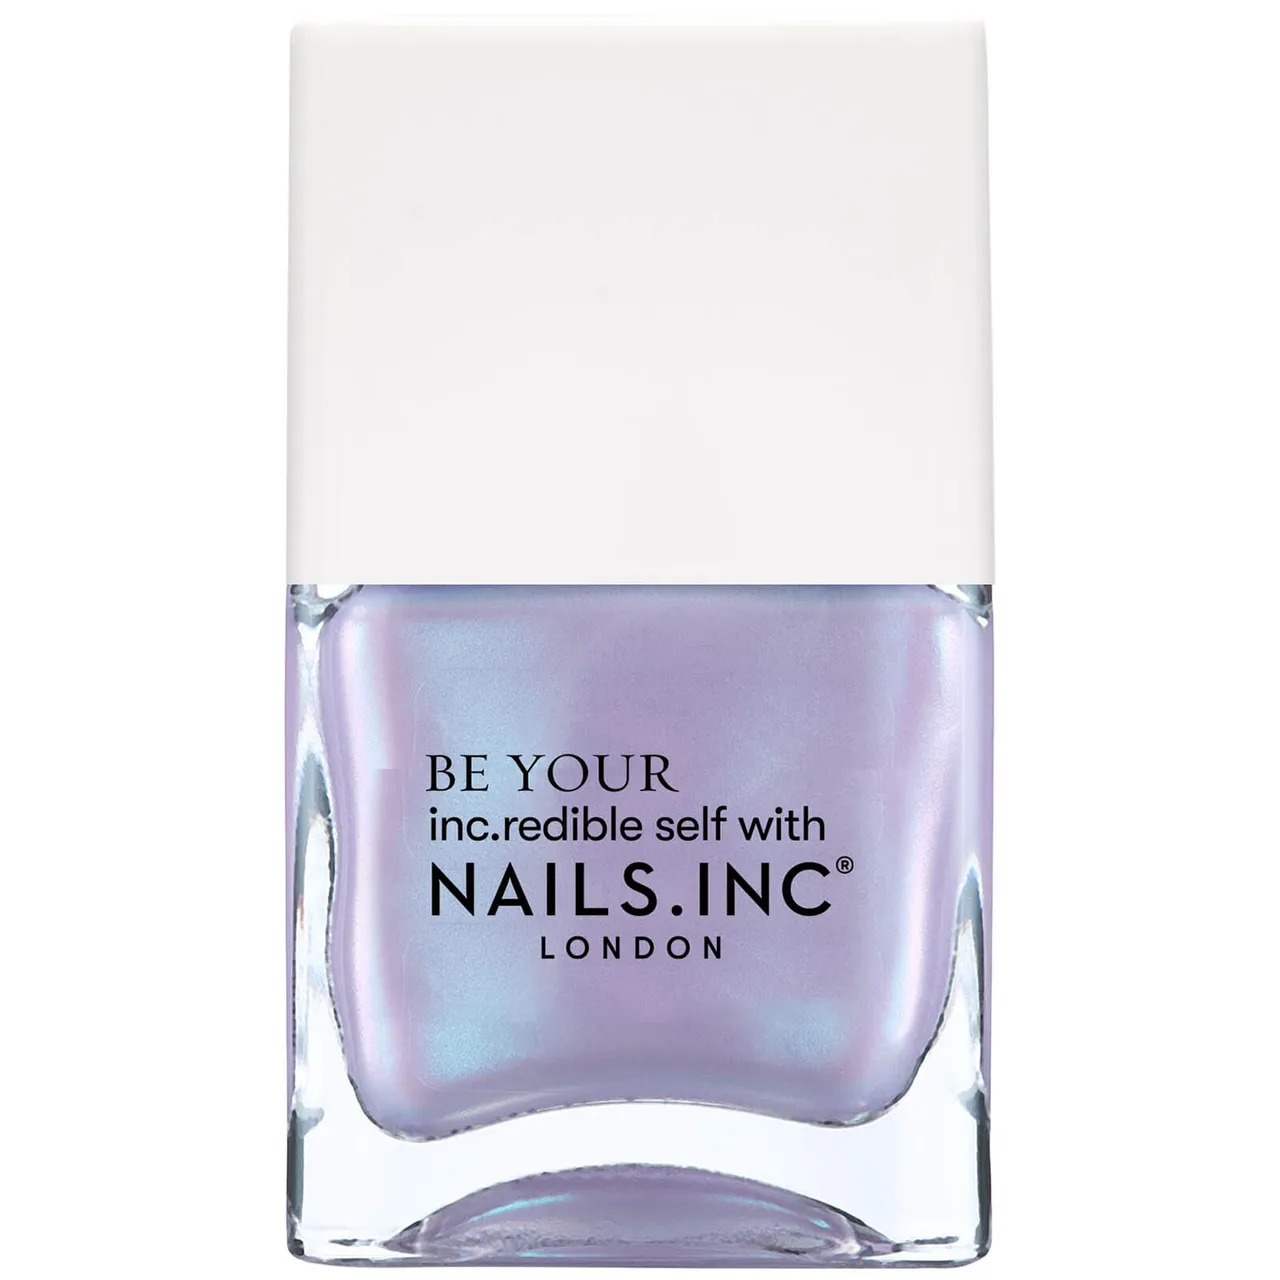 nails inc. Glazing Over Nail Polish Duo